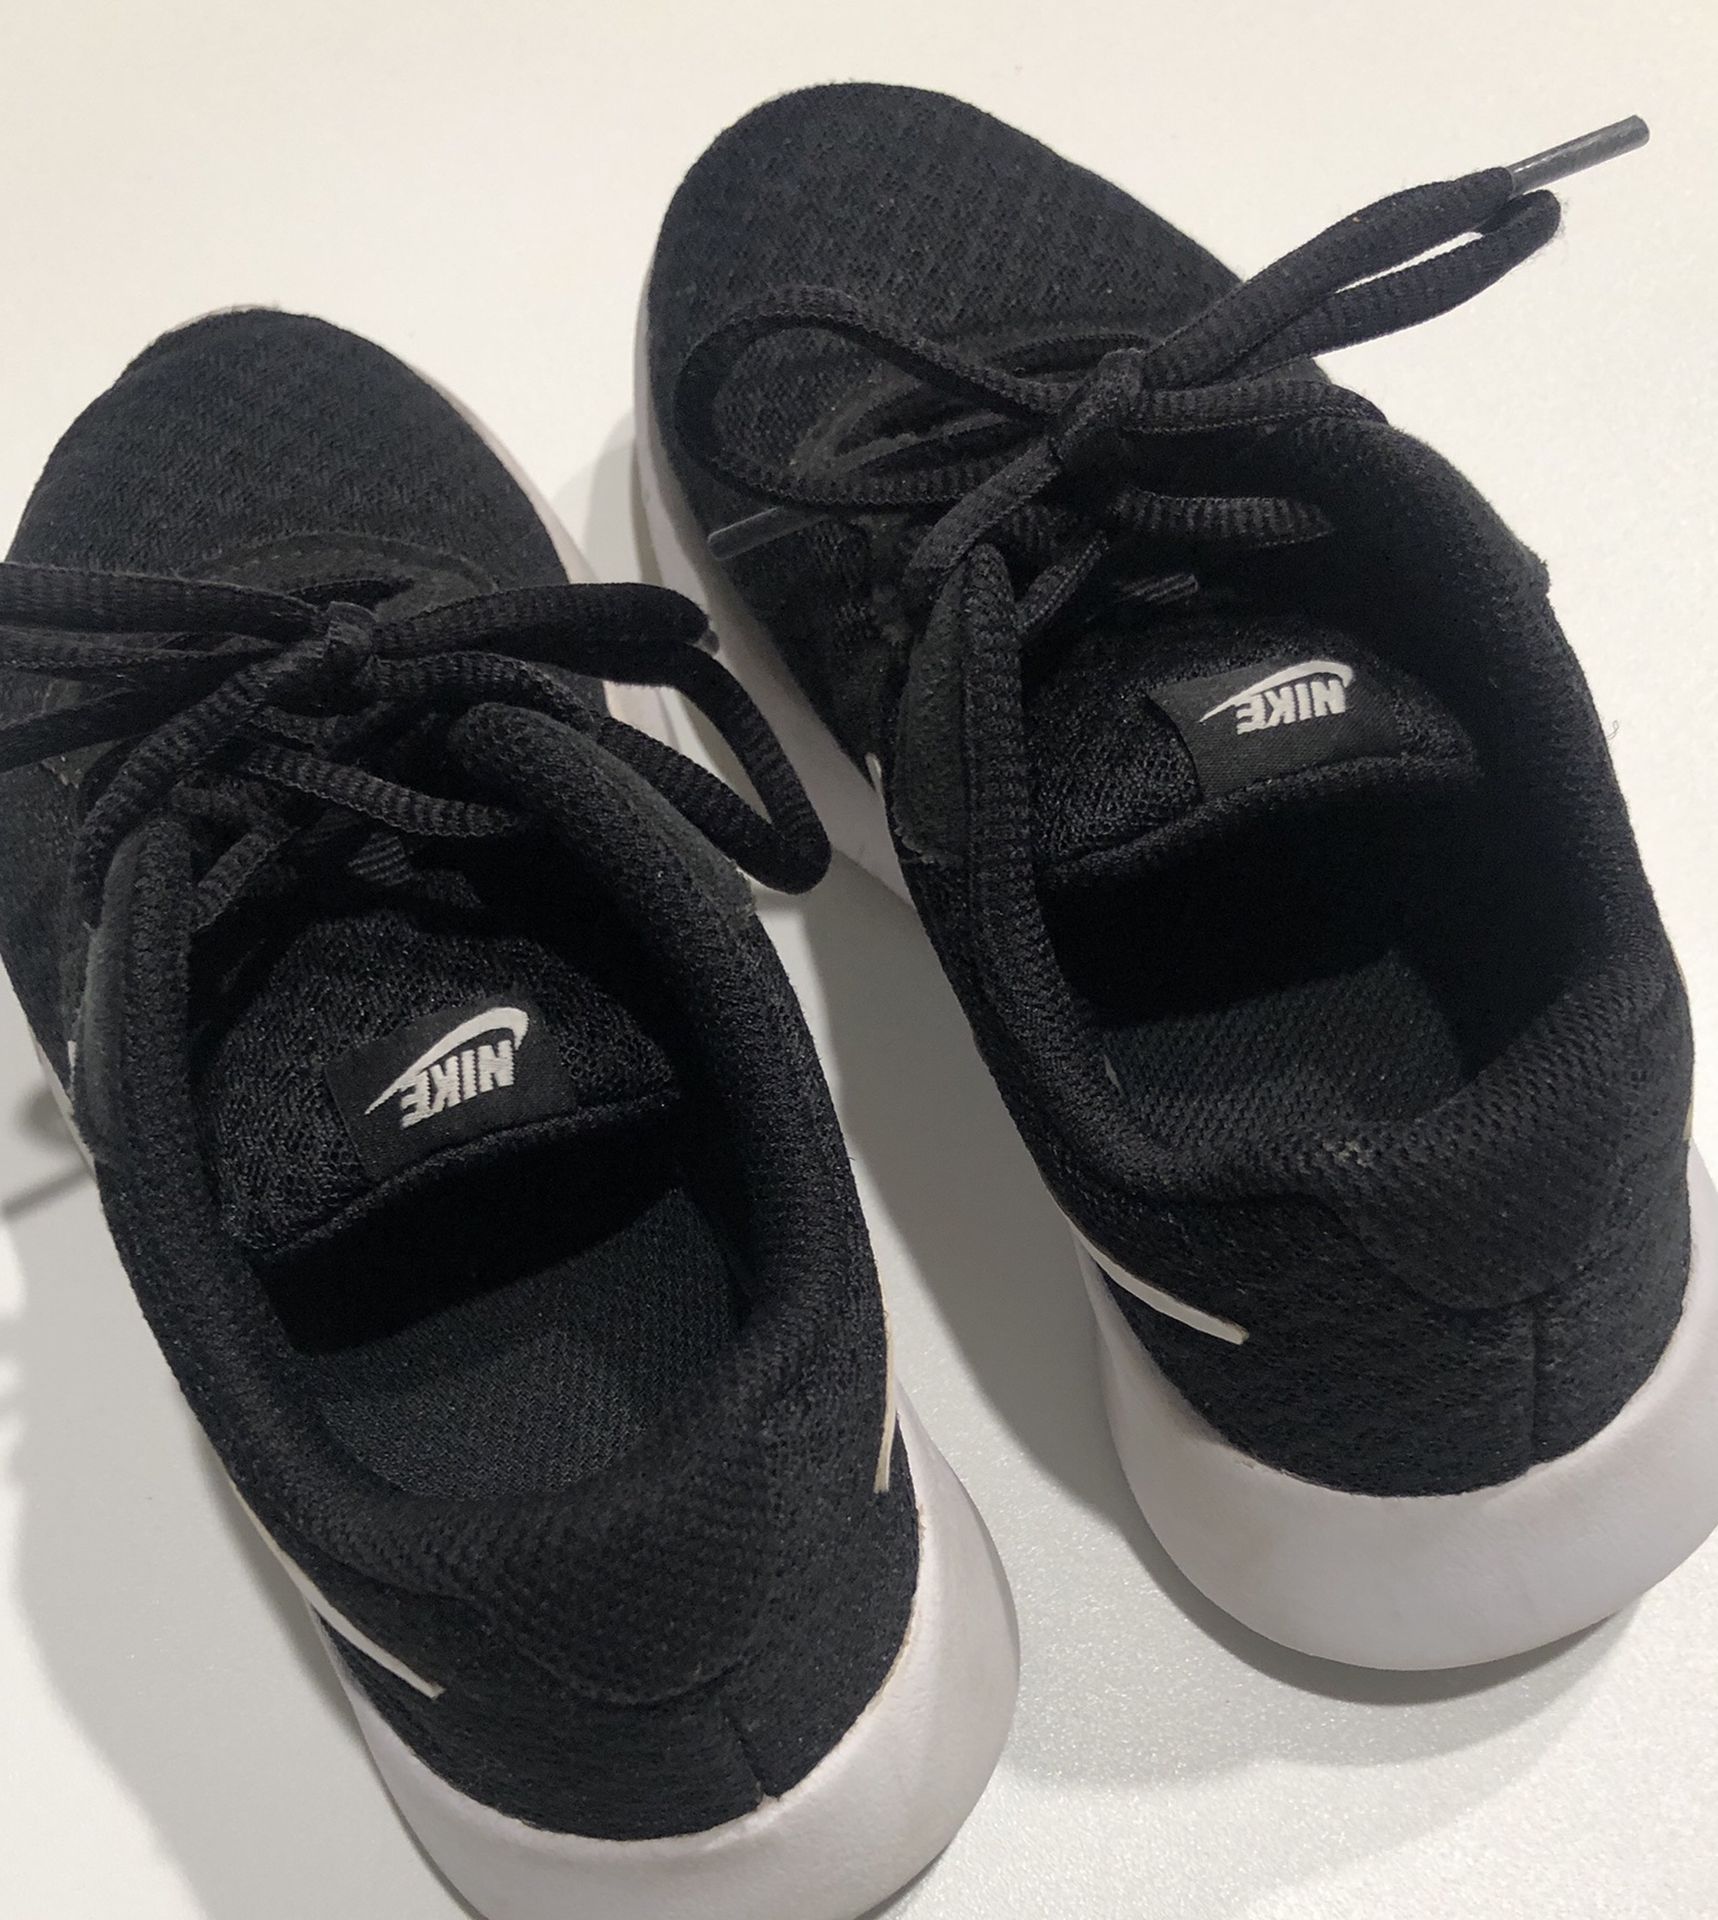 Nike Shoes Size 1.5 (1 1/2)